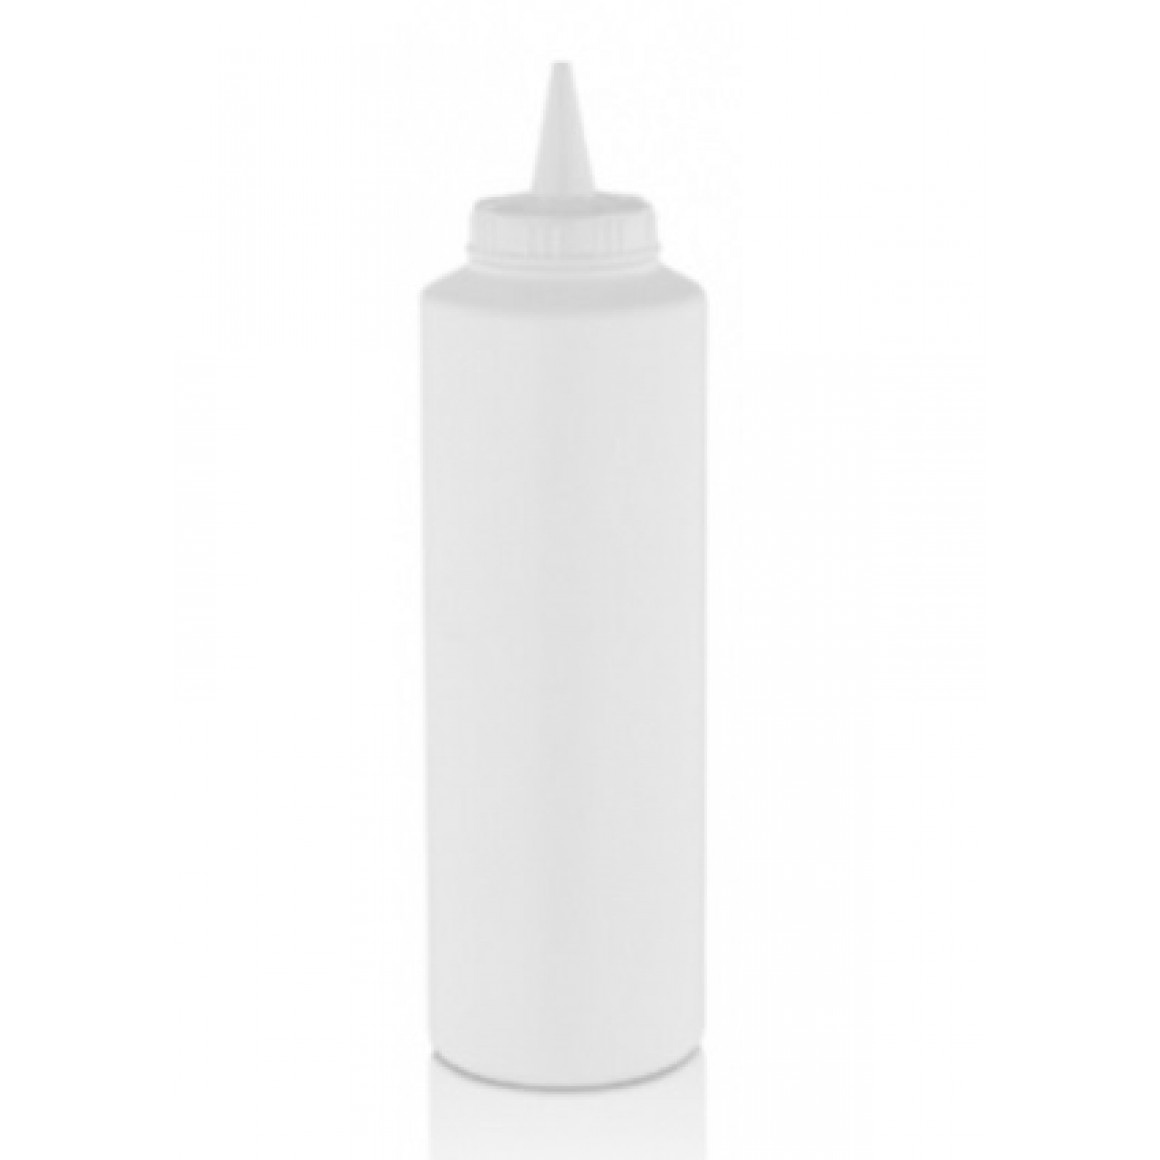 Squeeze bottle dispenser 500 ml White